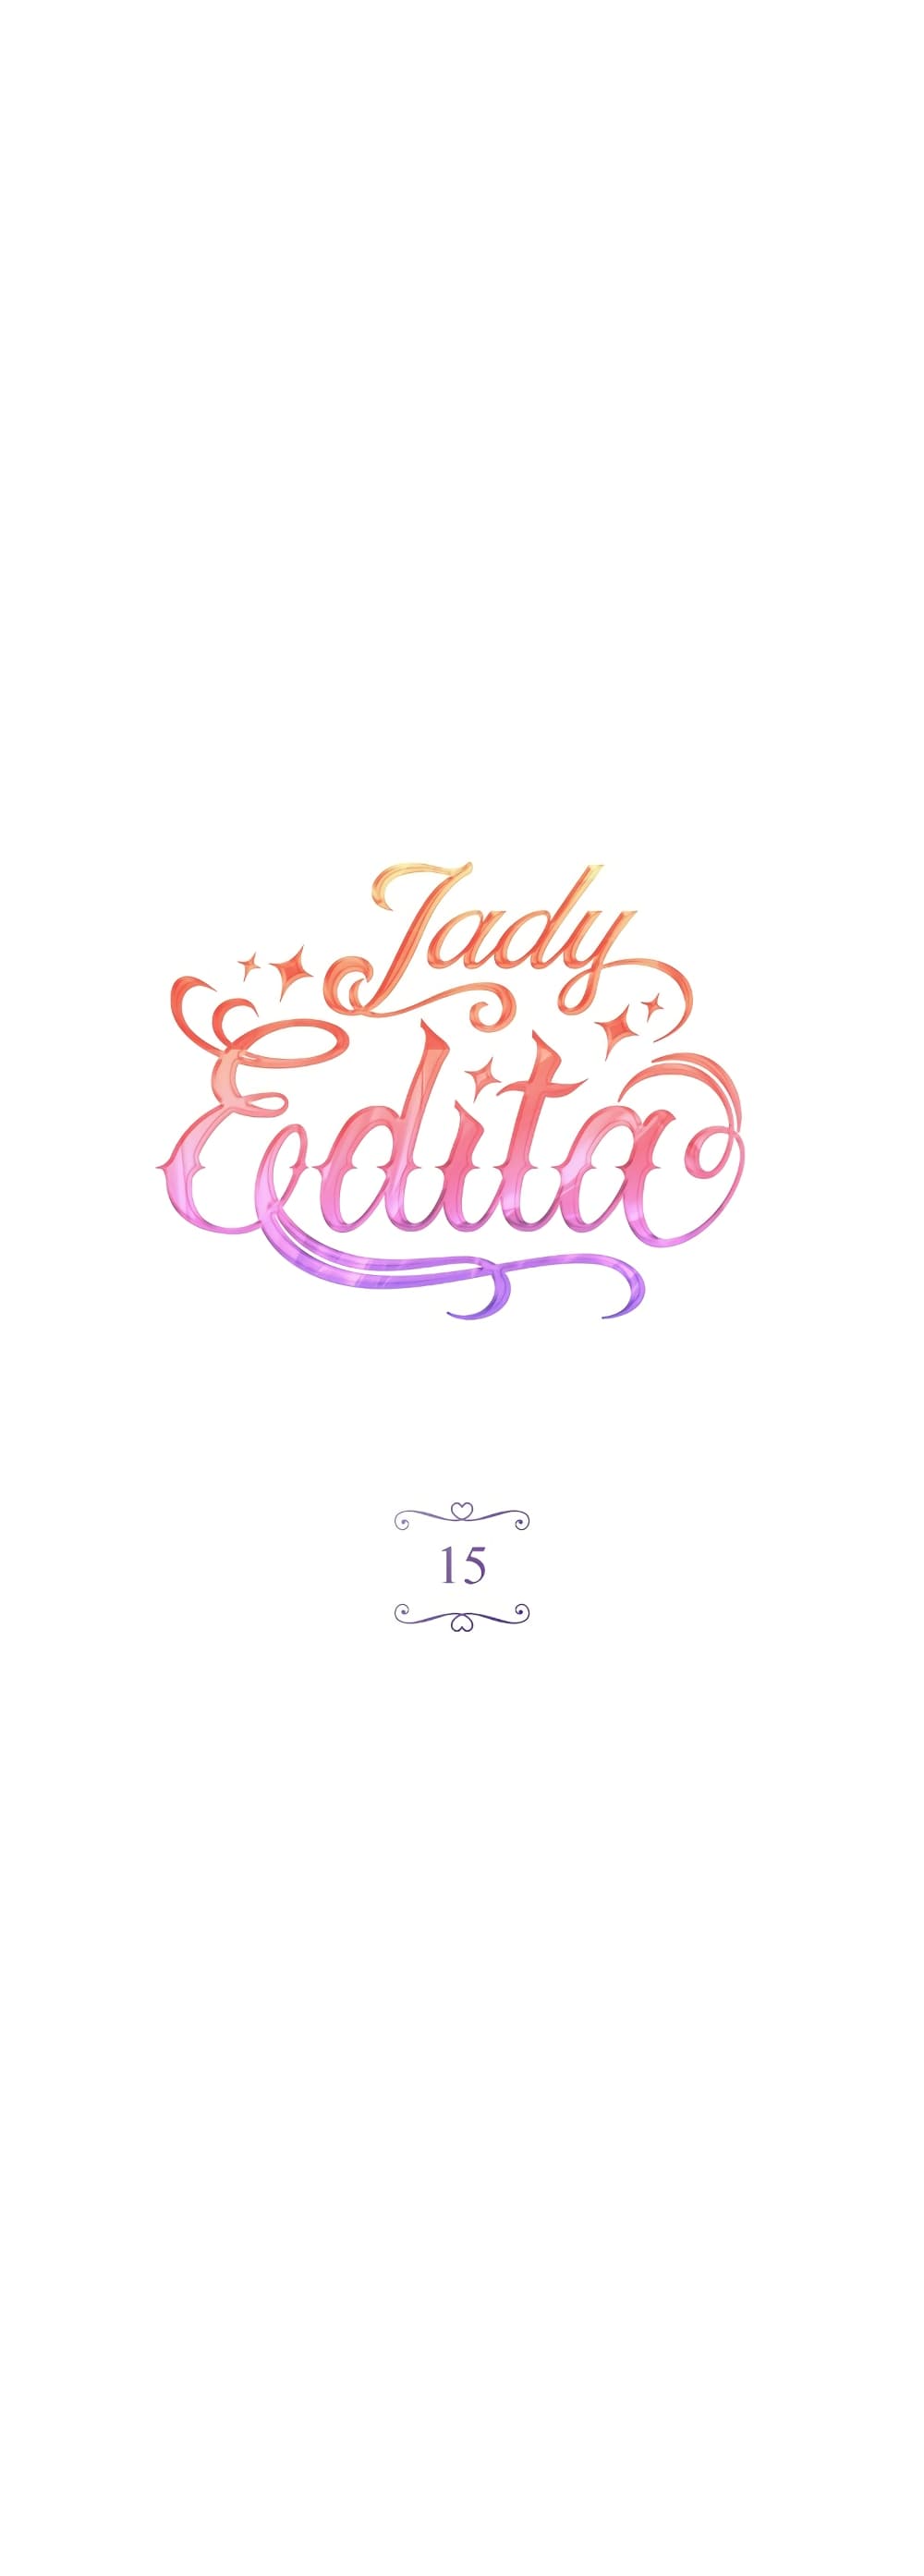 Lady Edita 15-15